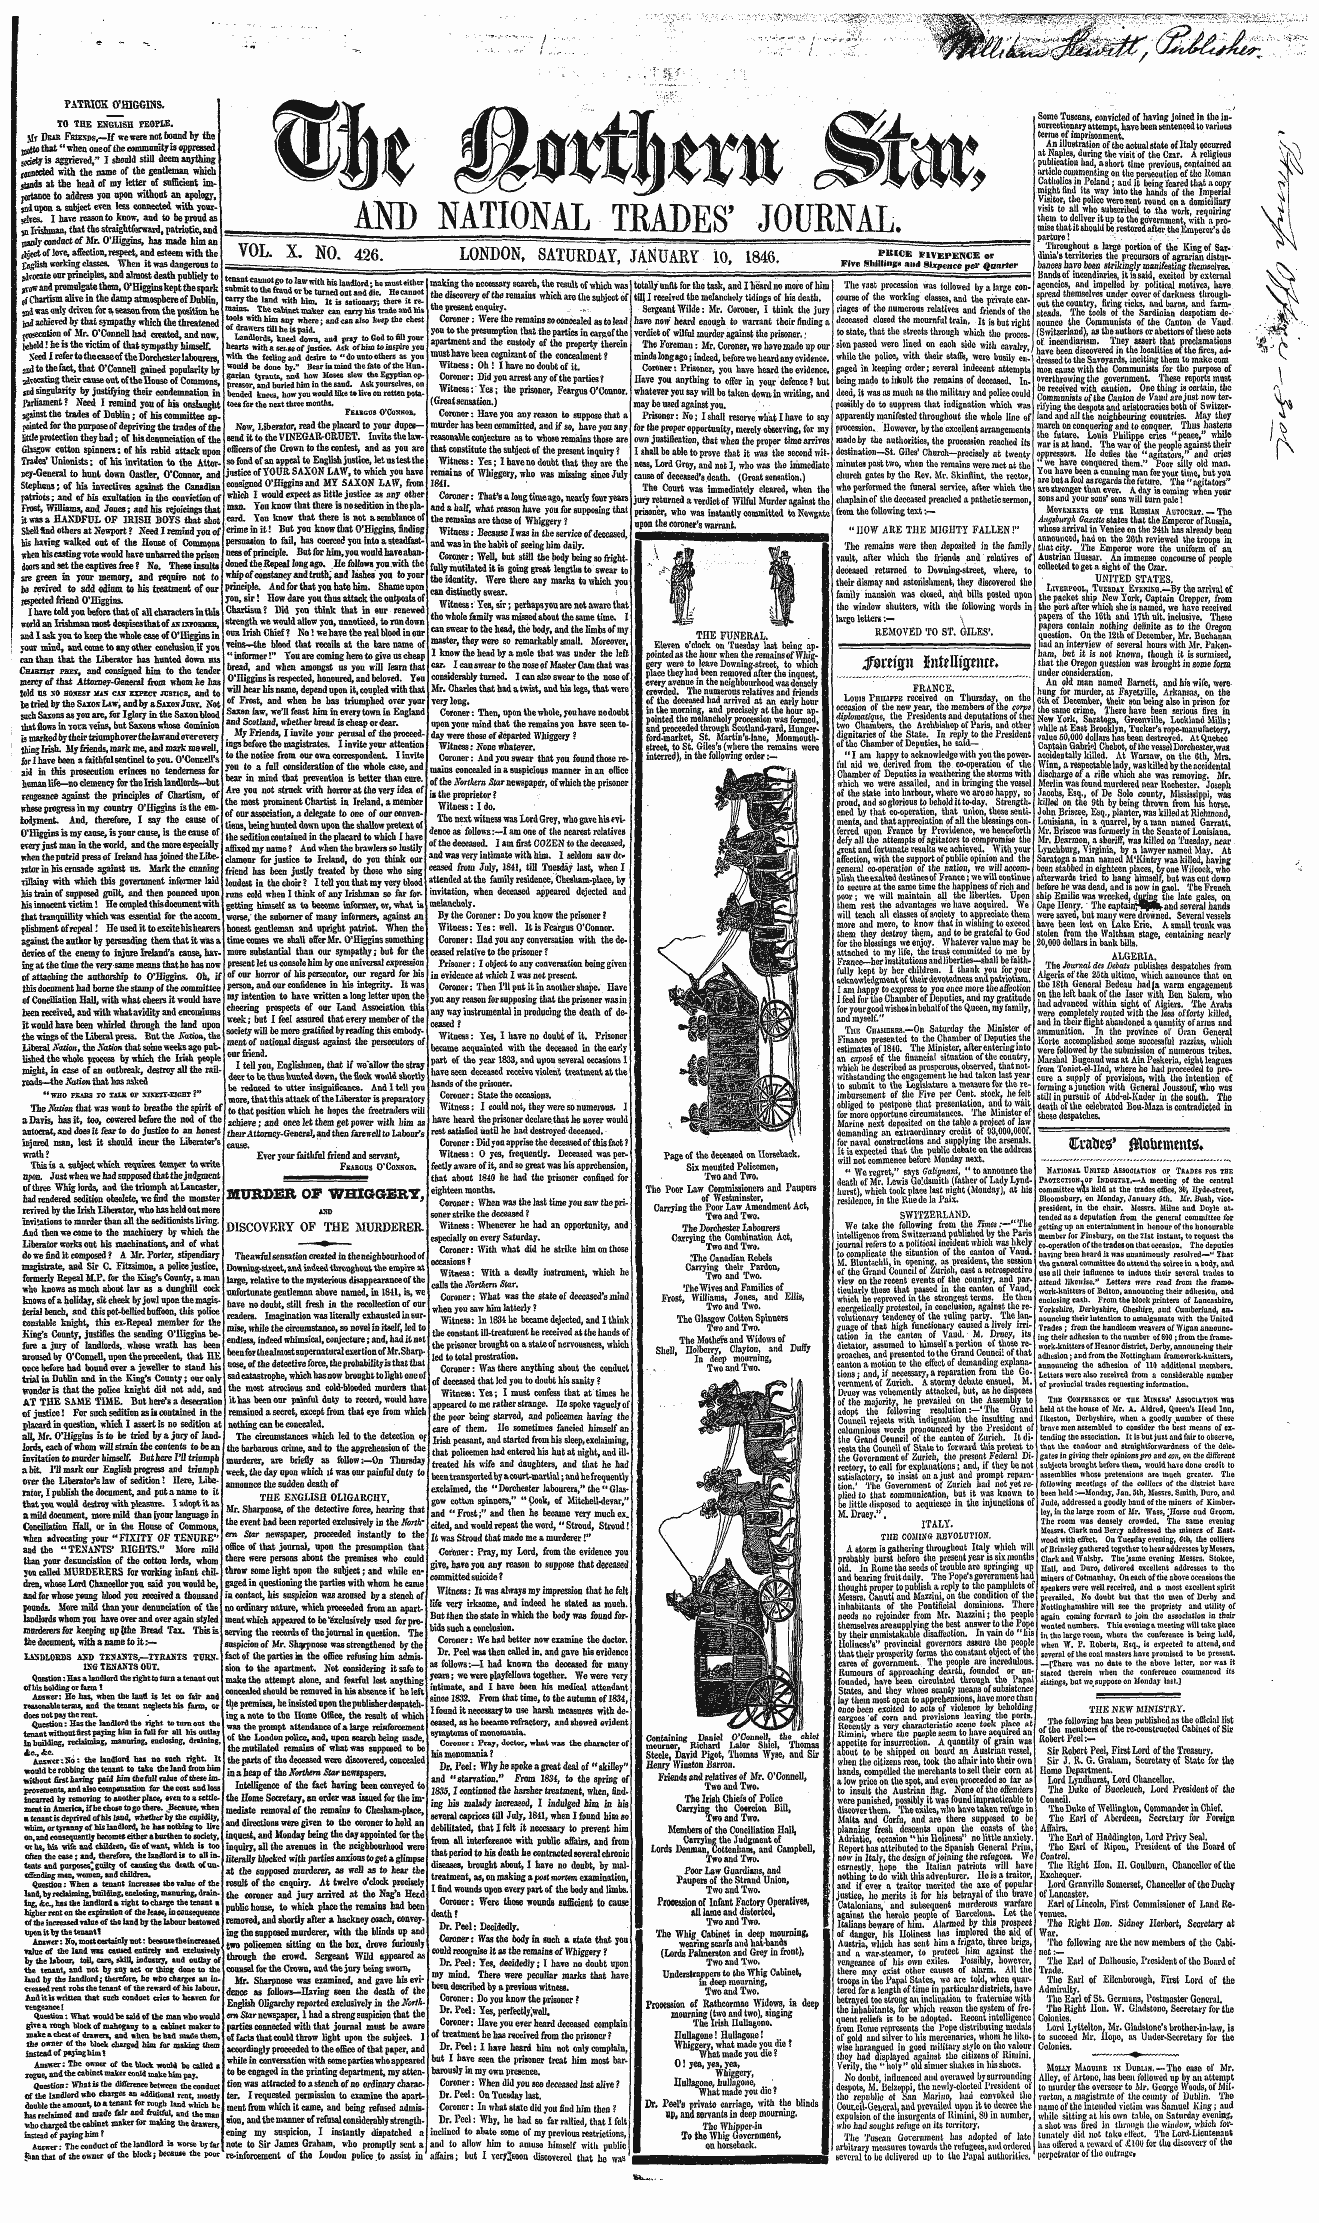 Northern Star (1837-1852): jS F Y, 3rd edition - Patrick O'Higgks.